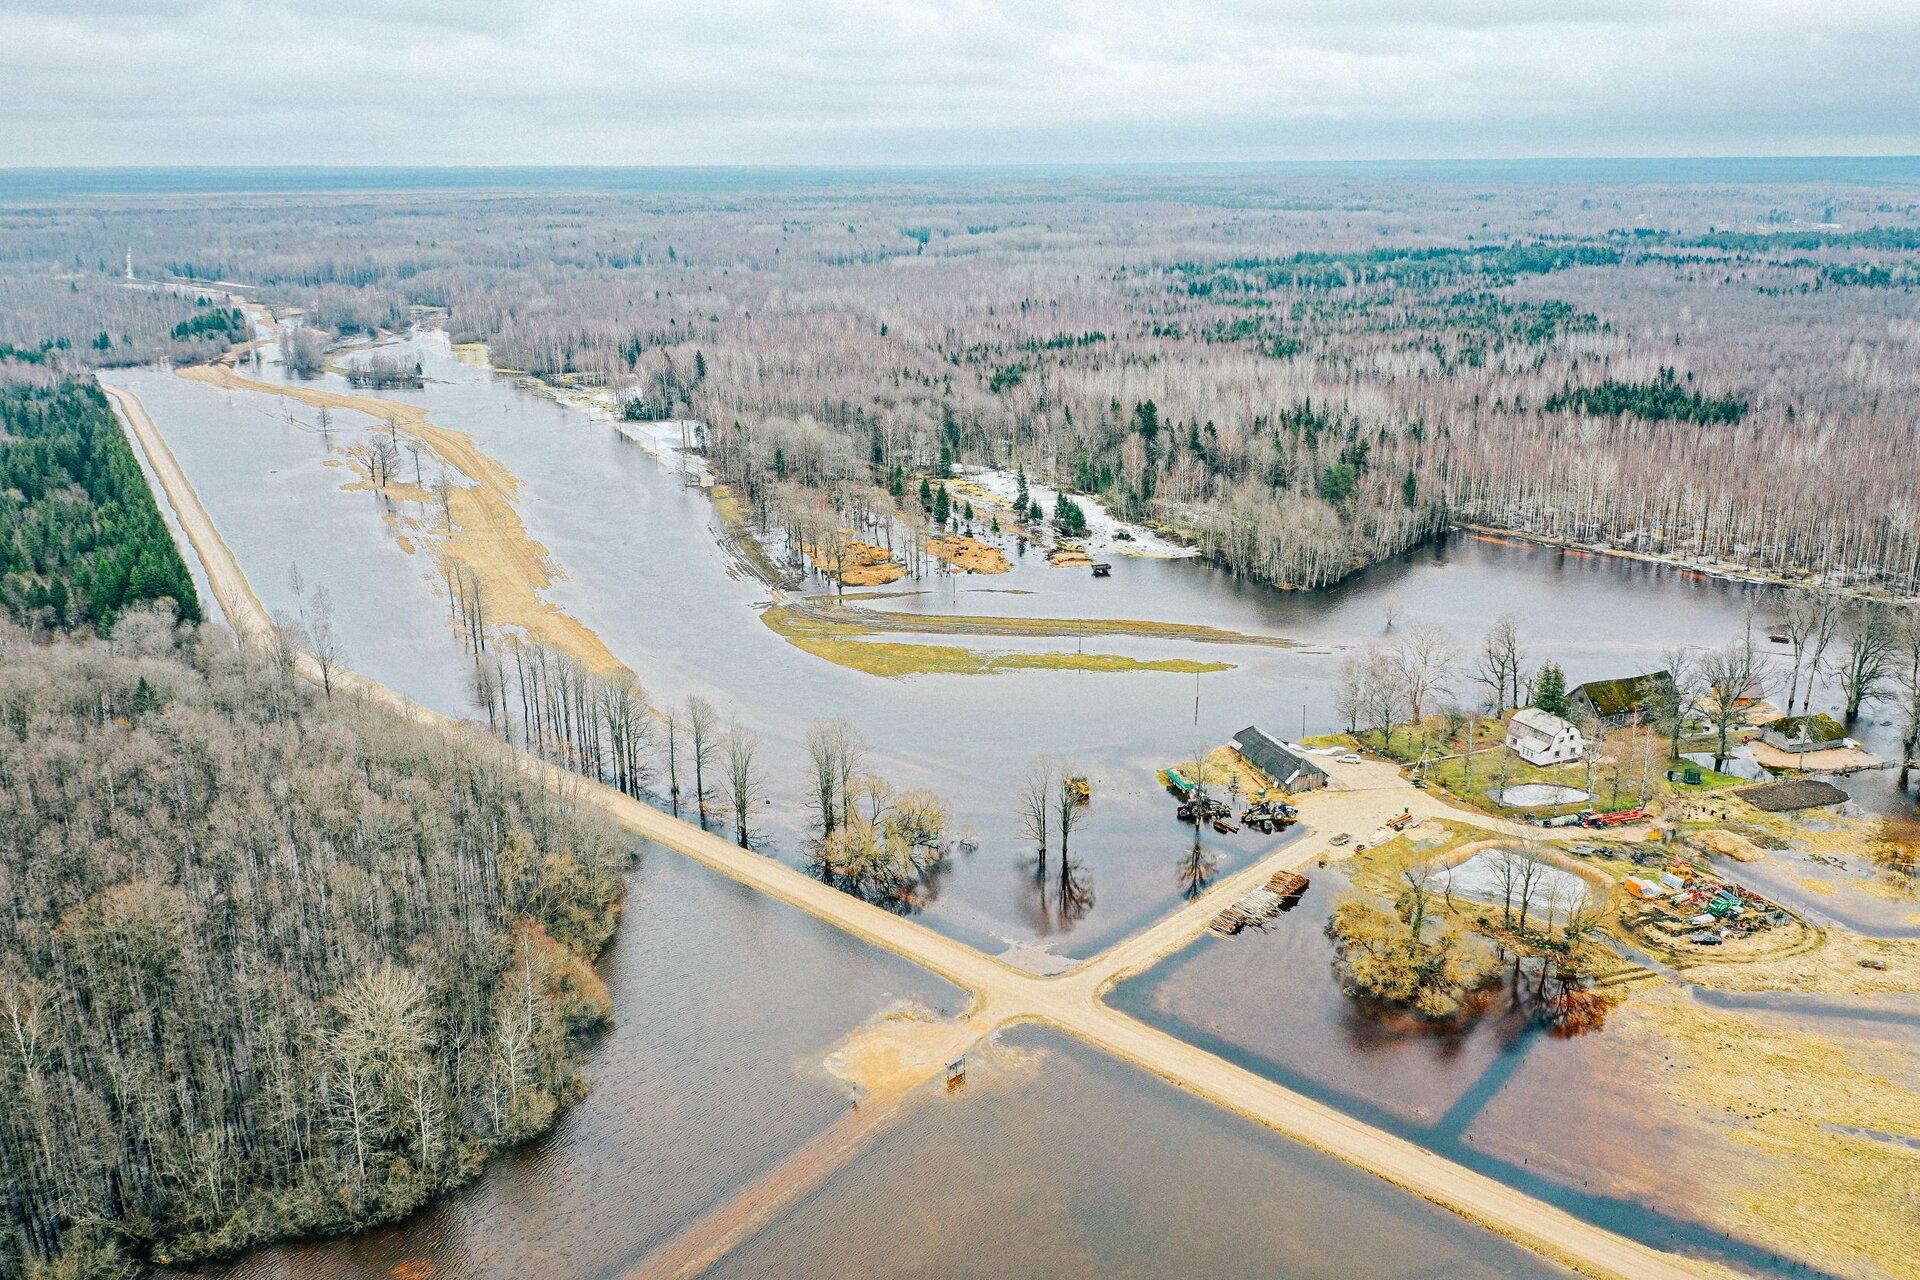 Läti meadow and seasonal flood